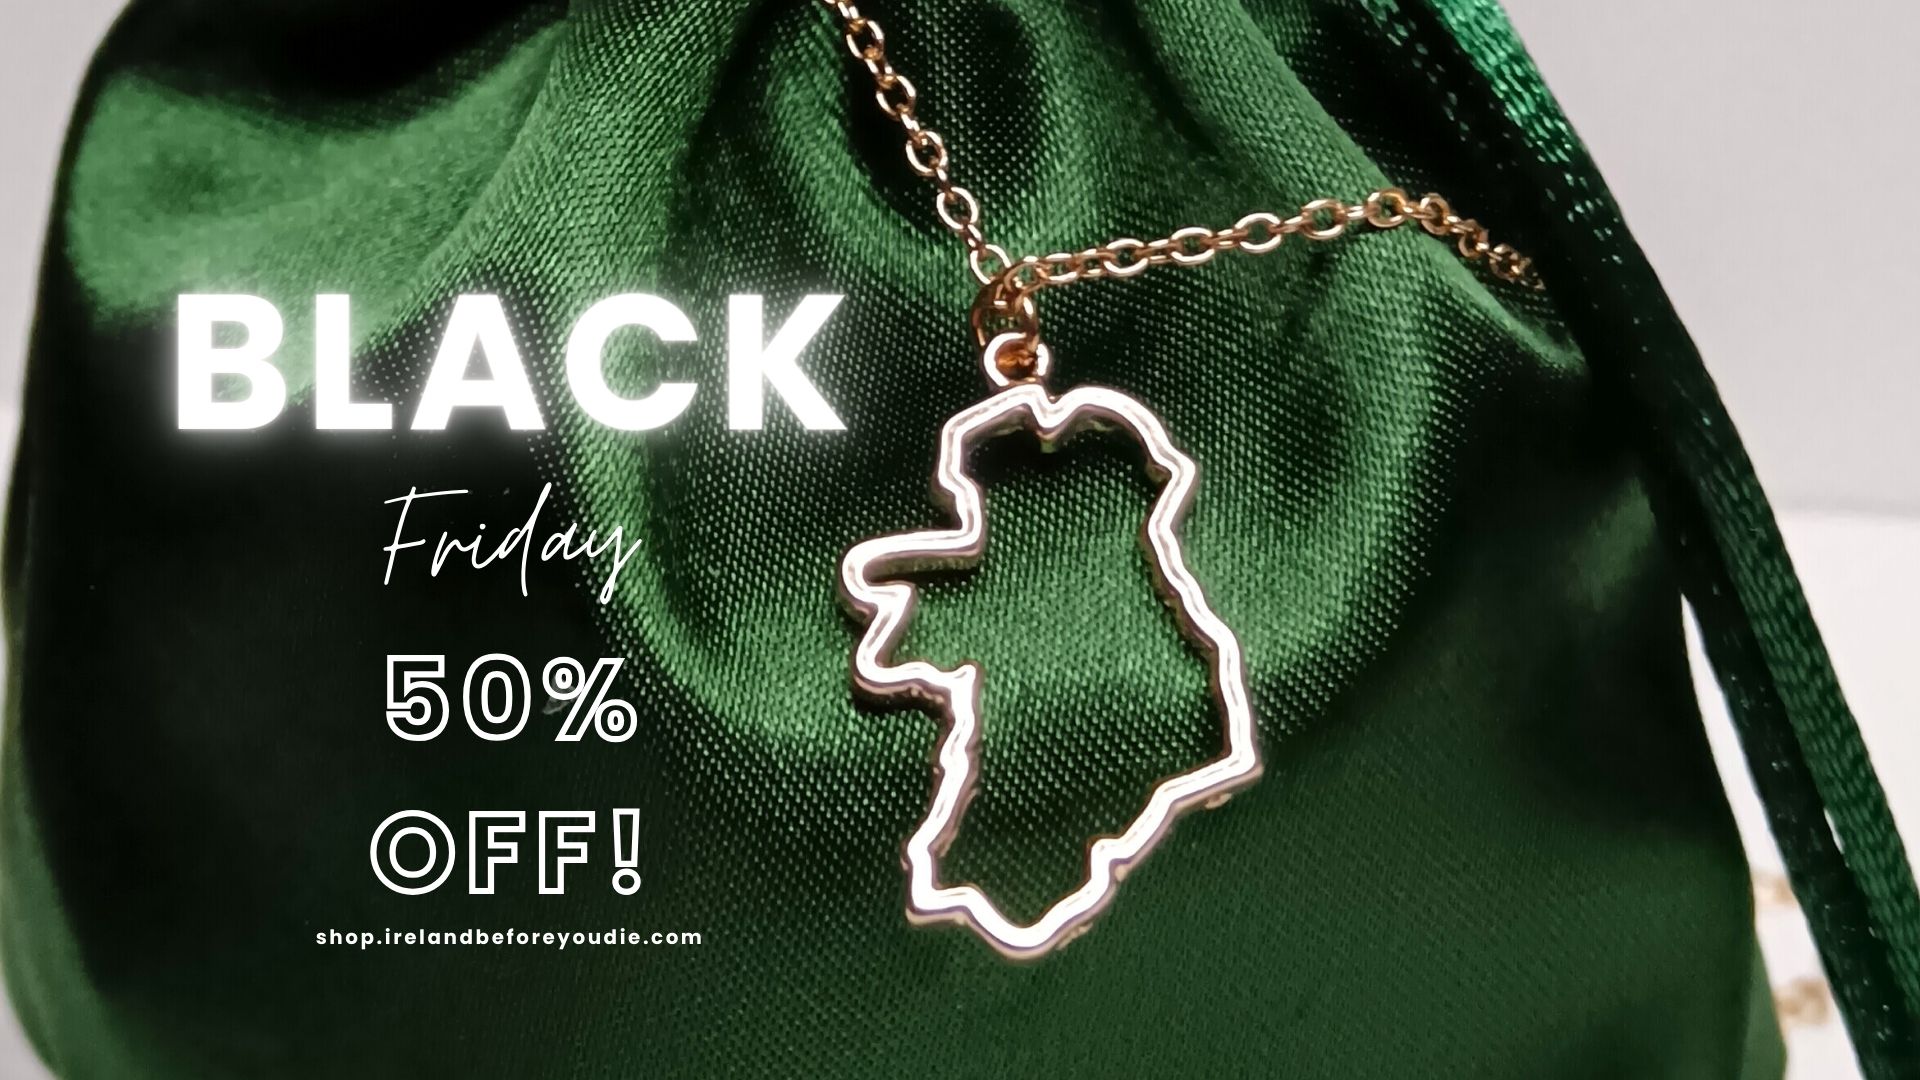 IB4UD Shop Rolls Out Extraordinary 50% Off Black Friday Deals on Irish Jewellery